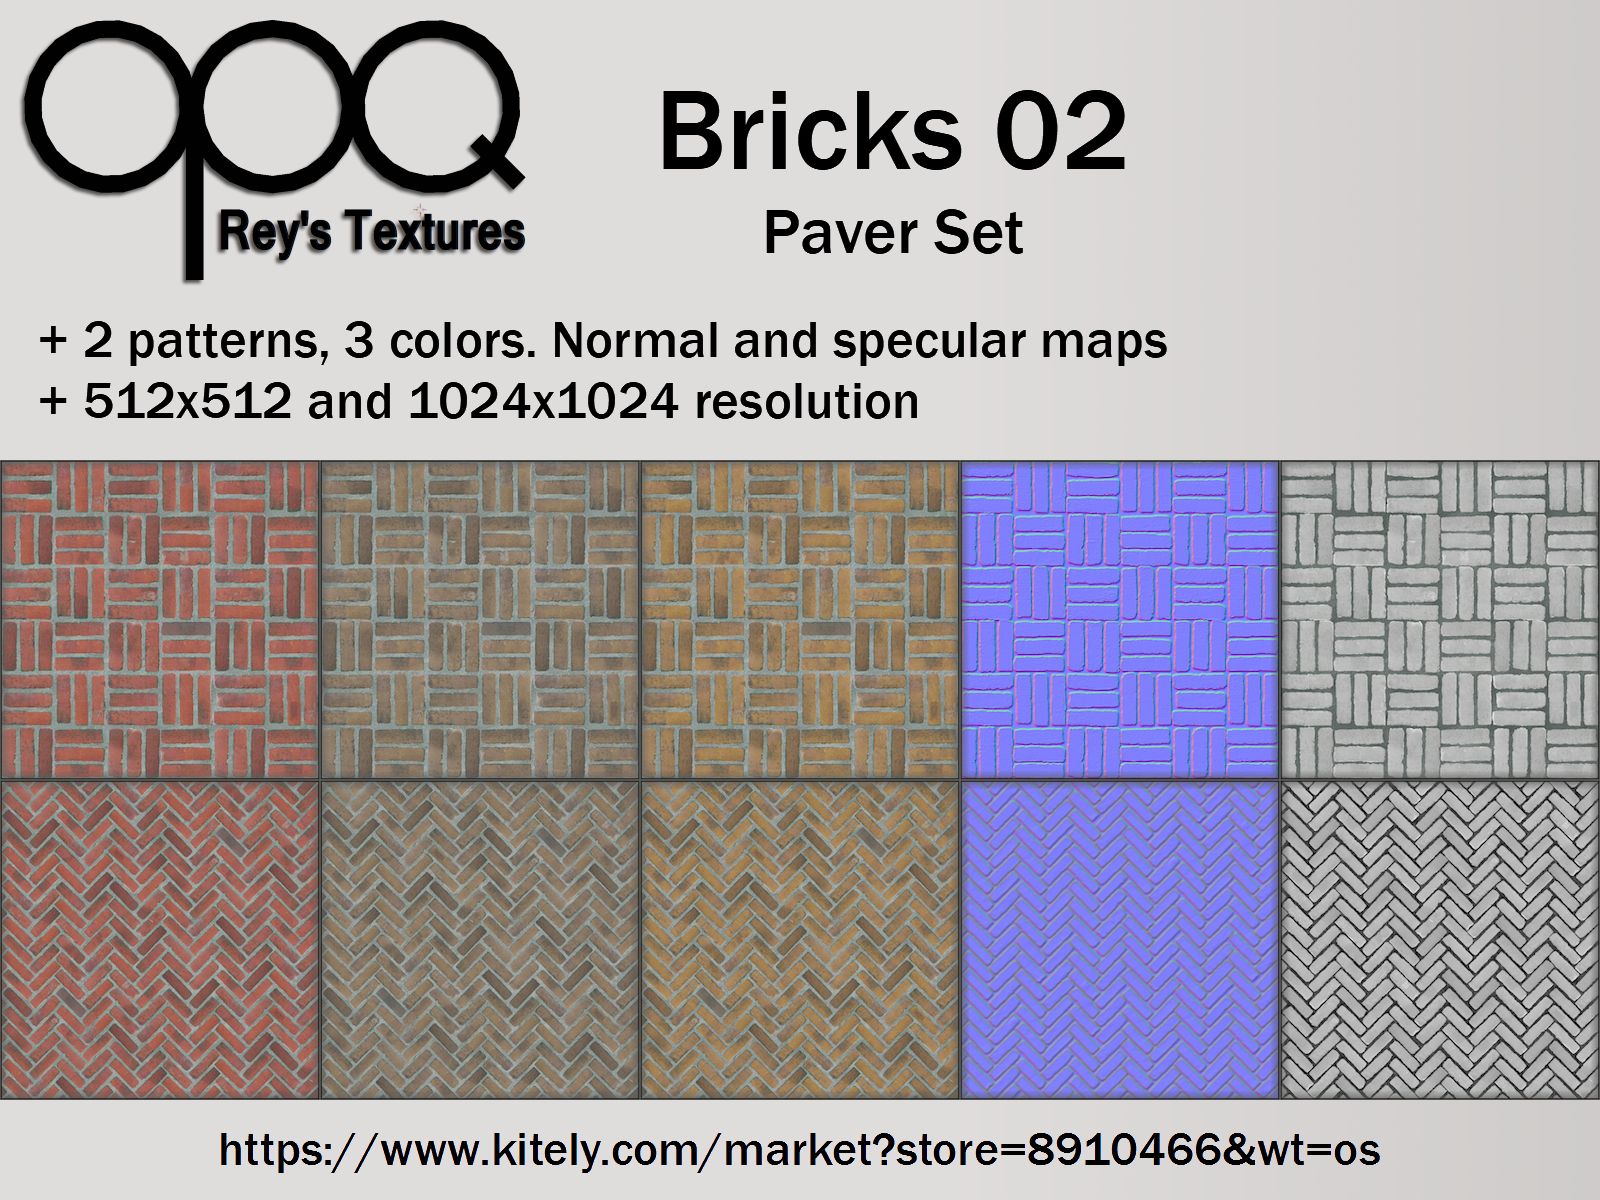 Rey's Bricks 02 Paver Set Poster KM.jpg